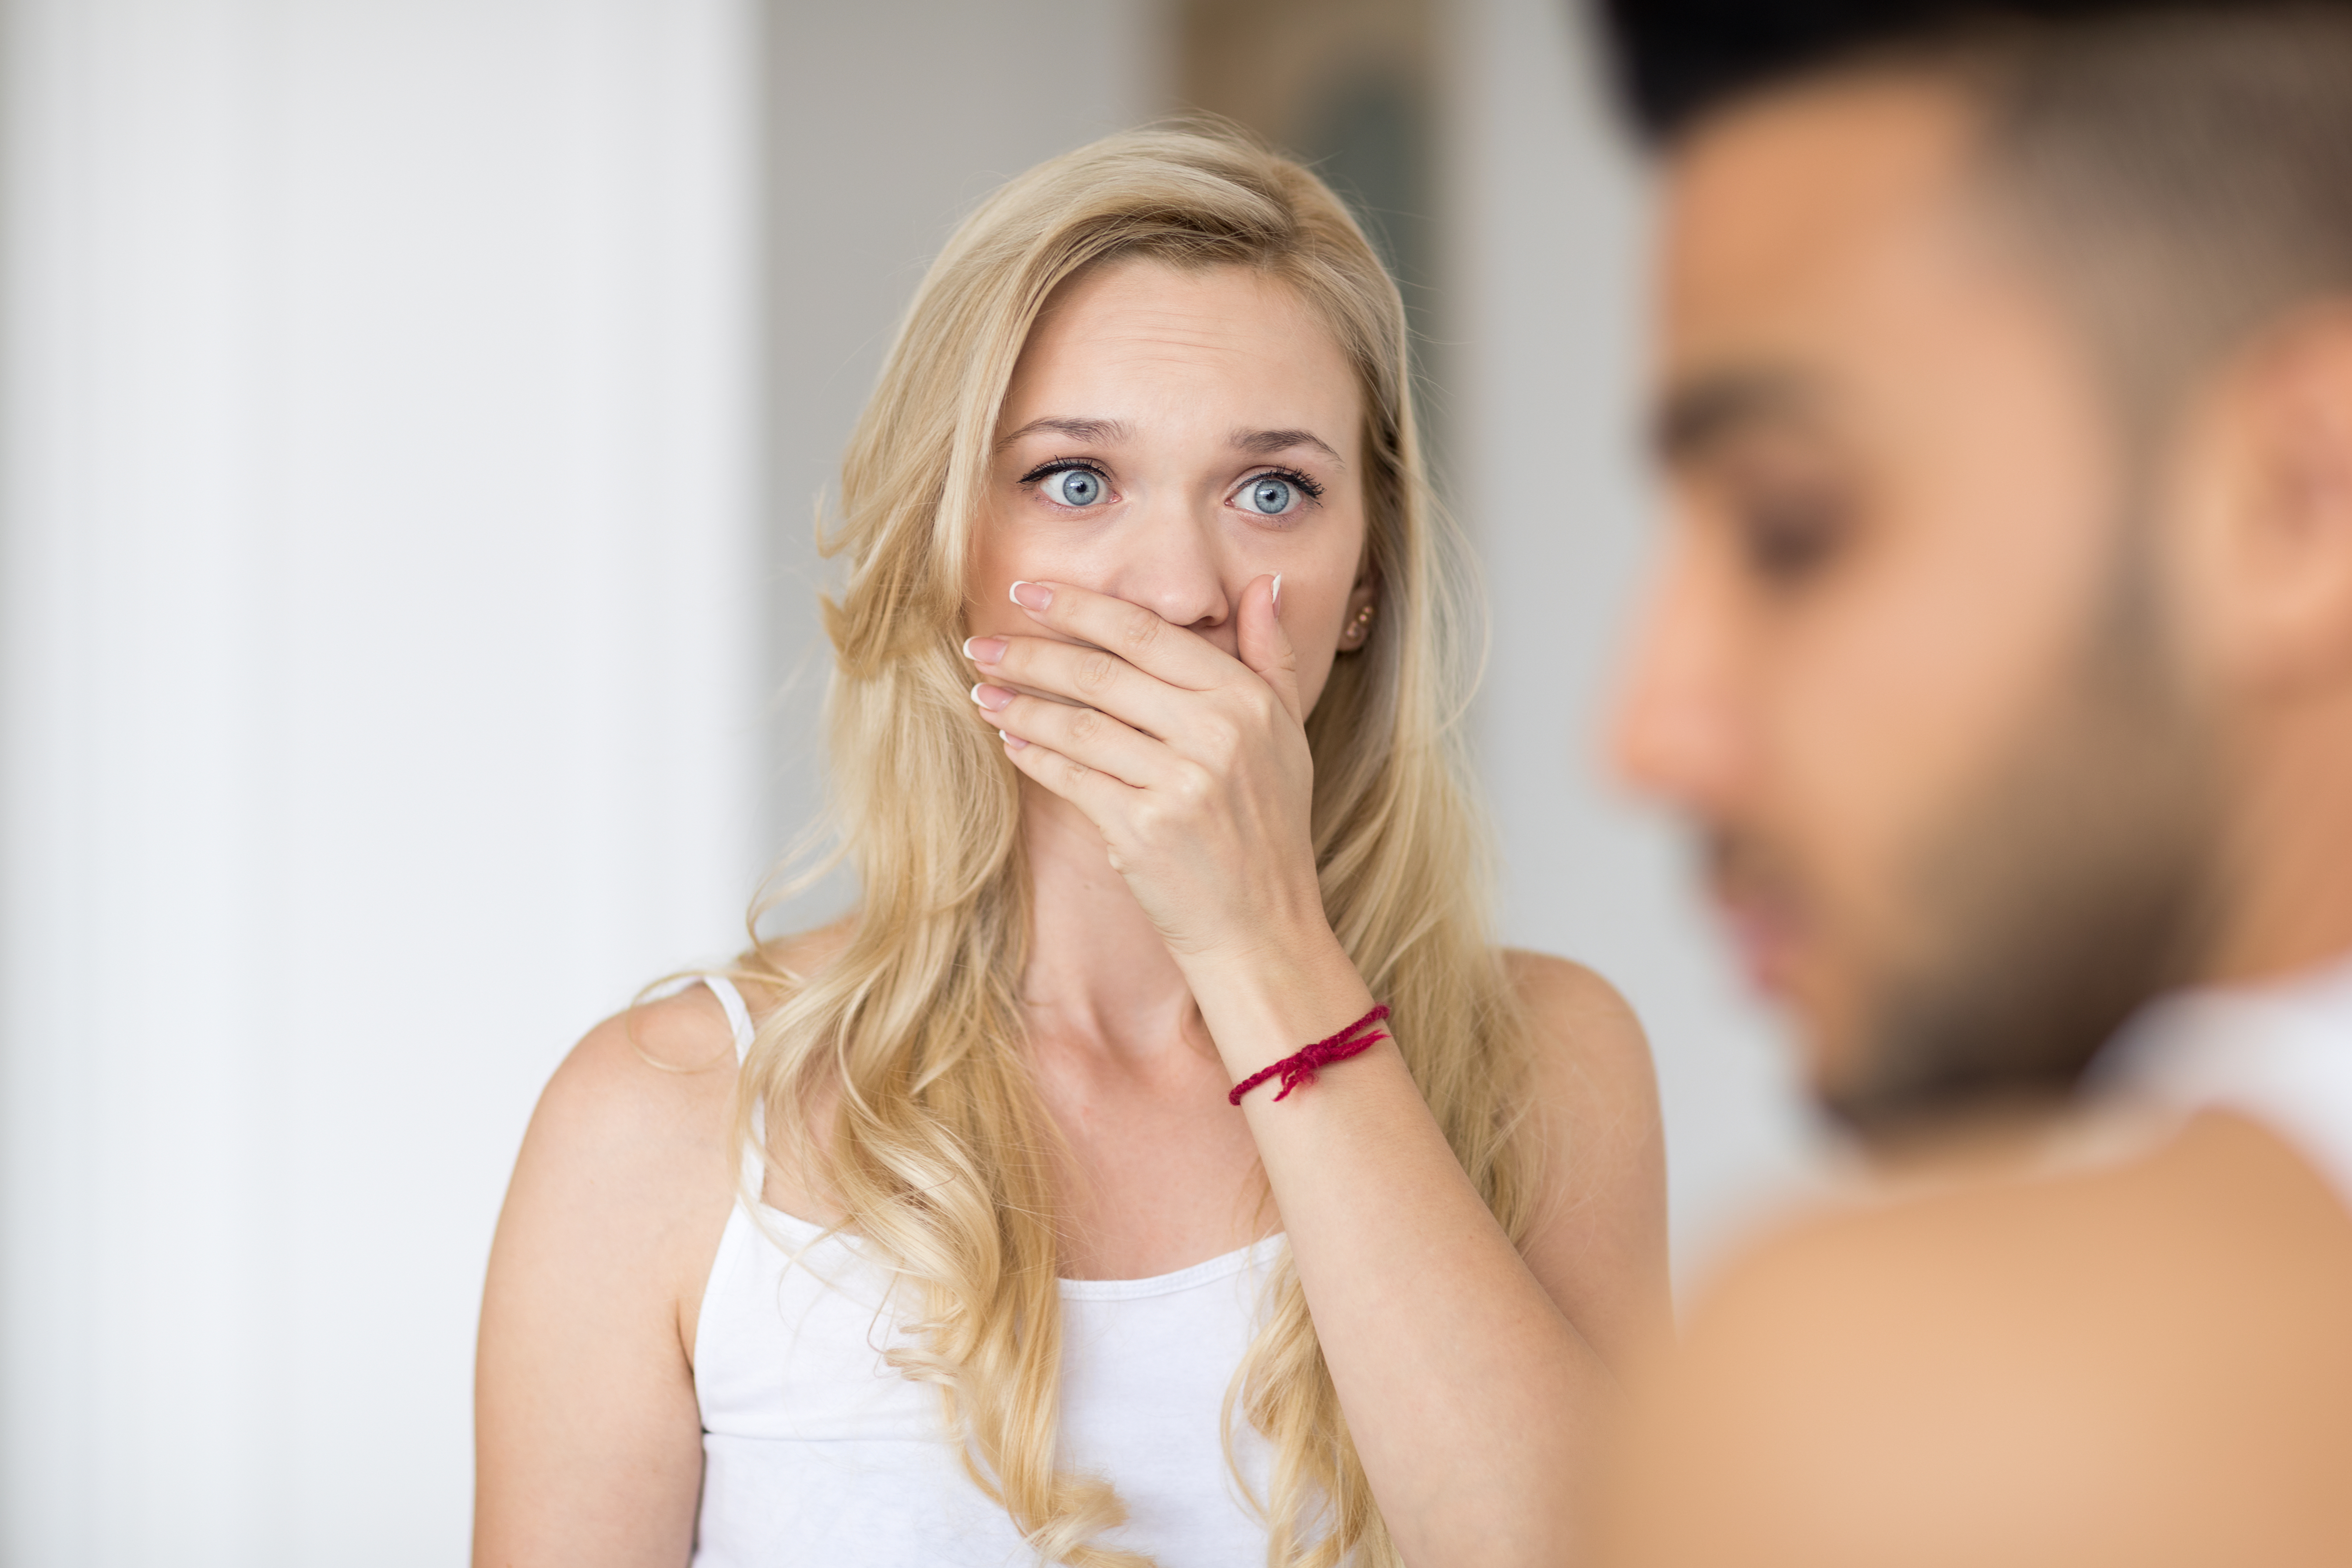 Une femme choquée qui regarde un homme | Source : Shutterstock